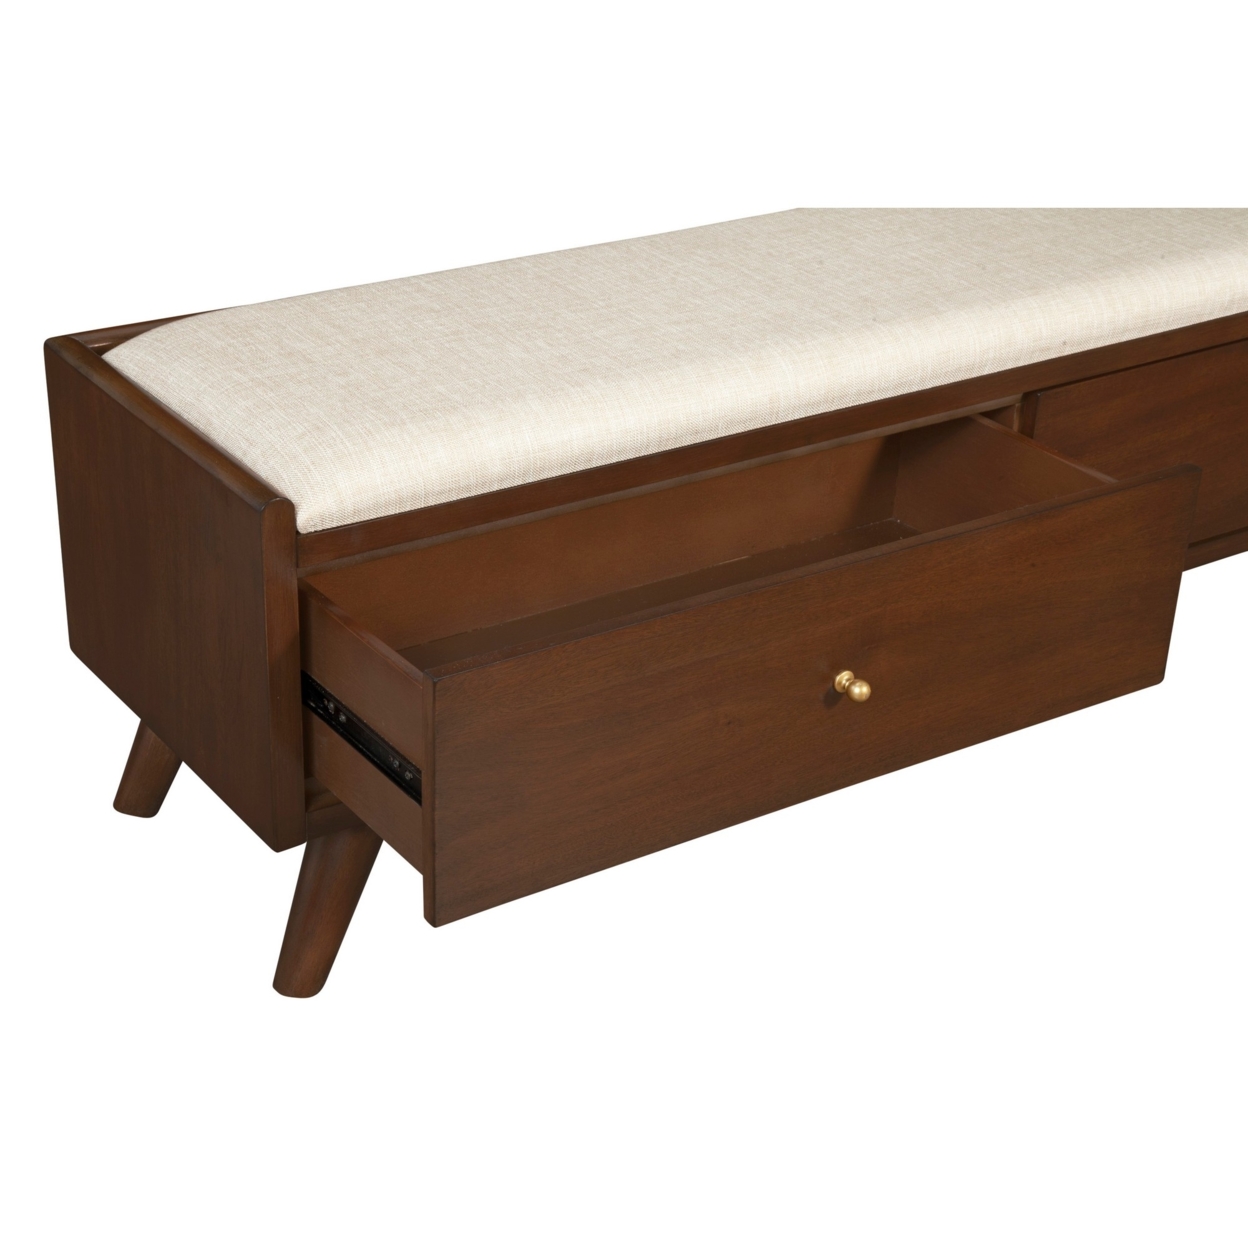 Ian 59 Inch 2 Drawer Accent Bench, Beige Seat, Mahogany Wood, Walnut Brown- Saltoro Sherpi